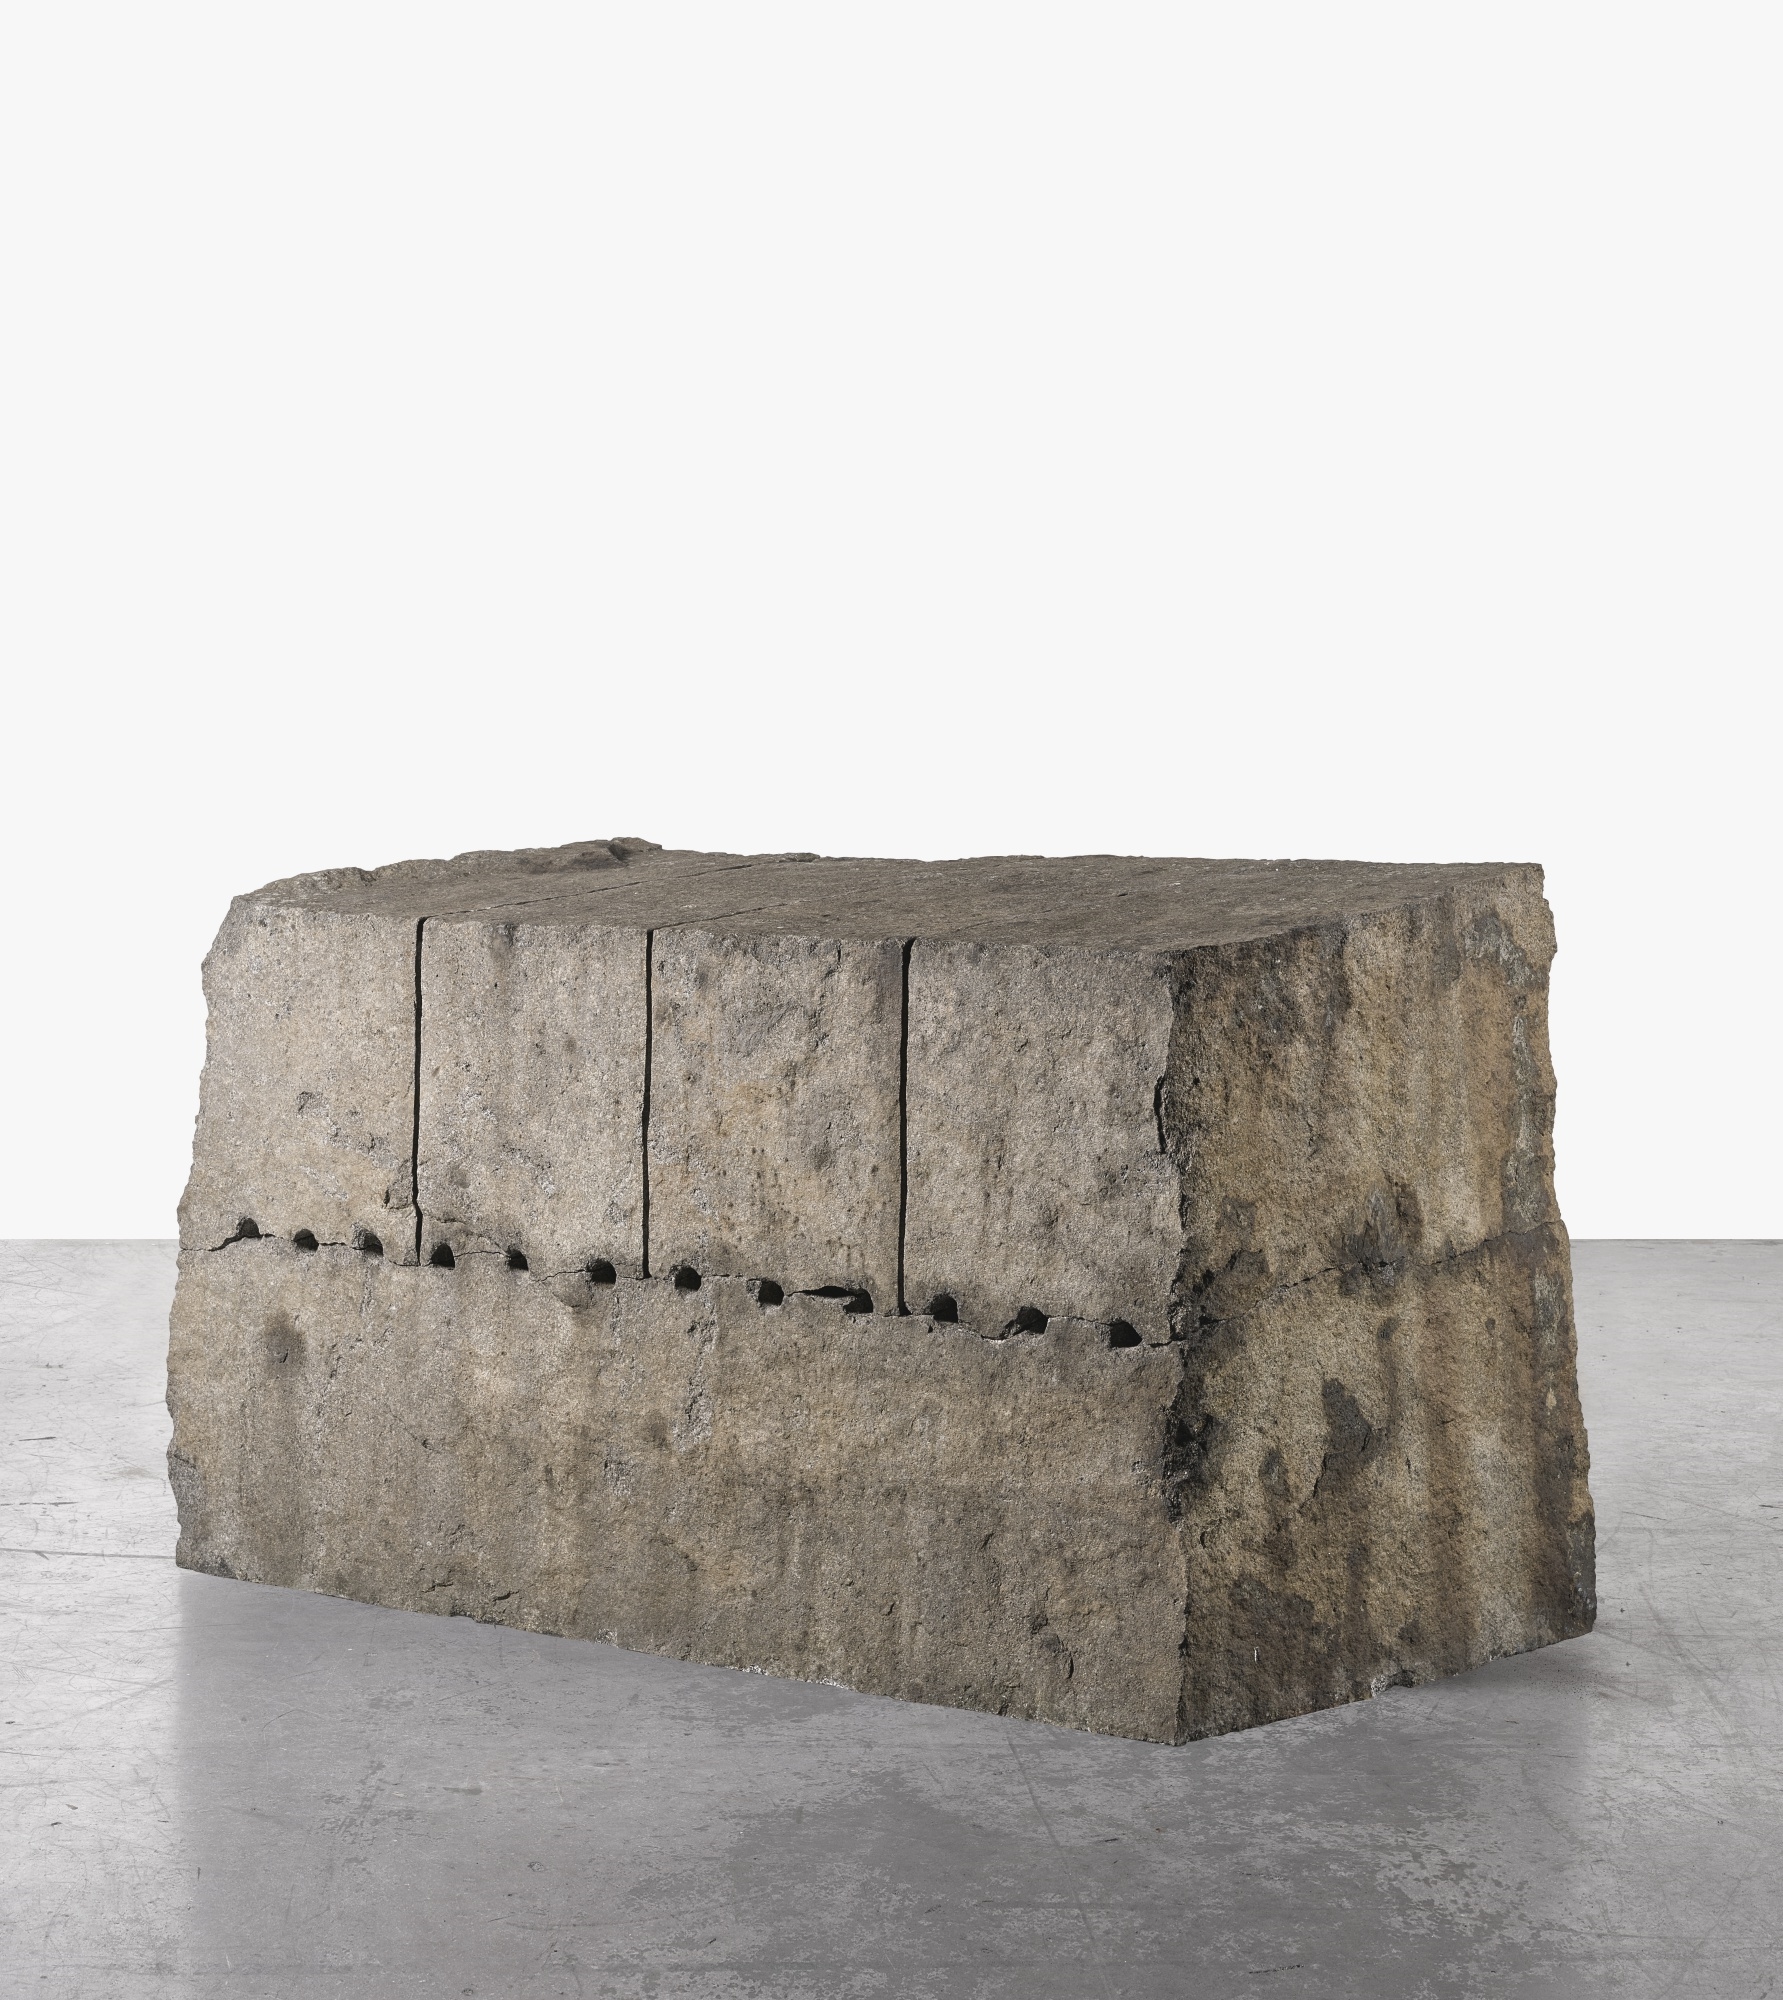 Artwork by Ulrich Rückriem, UNTITLED, Made of Vire granite